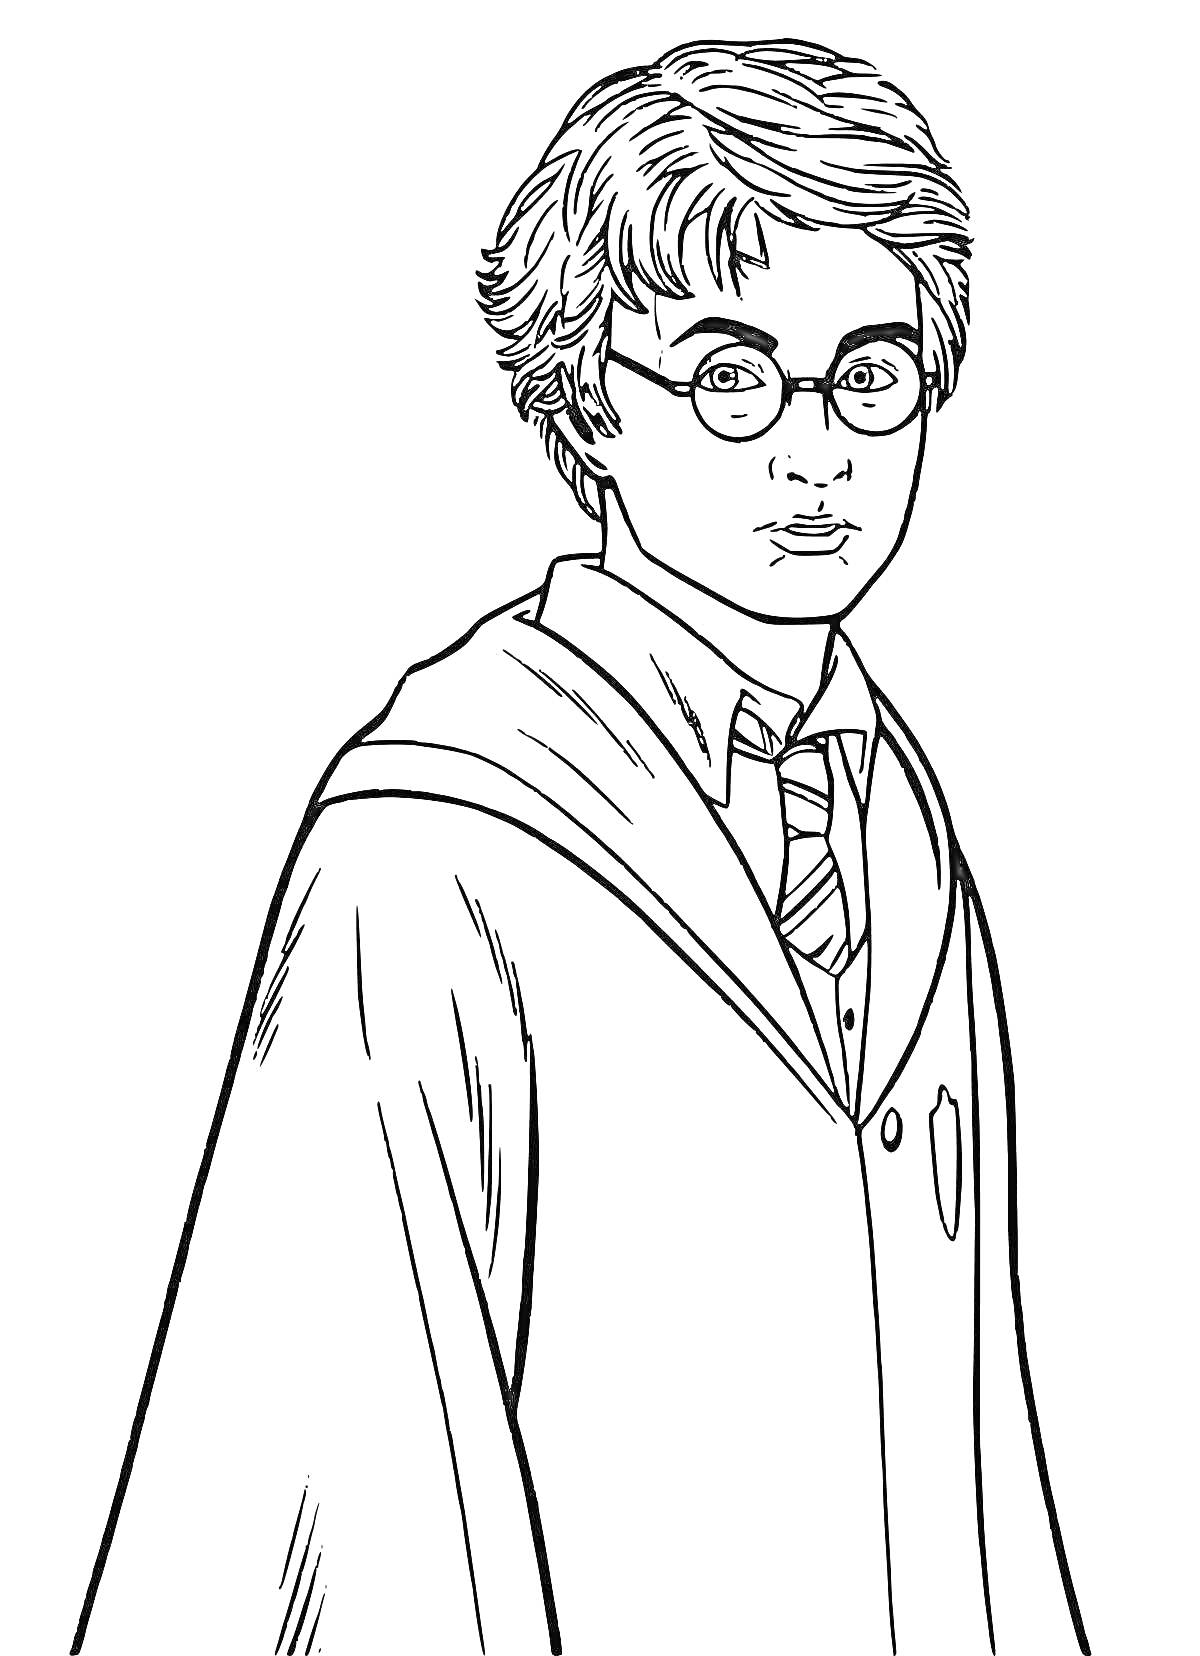 Гарри Поттер в мантии и очках